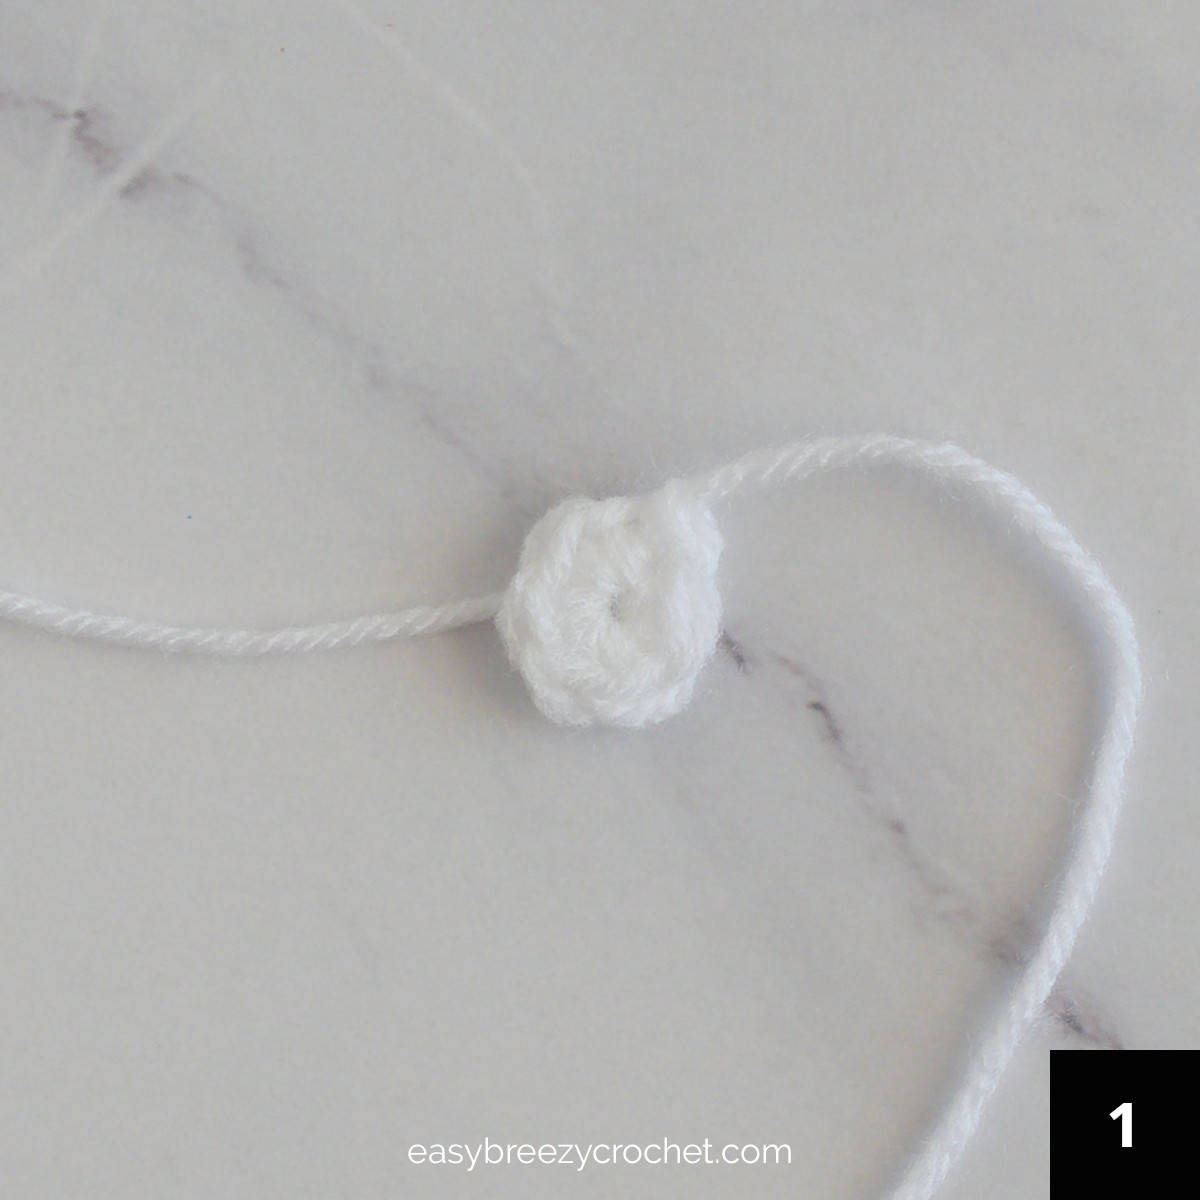 A small crocheted white cirlce.